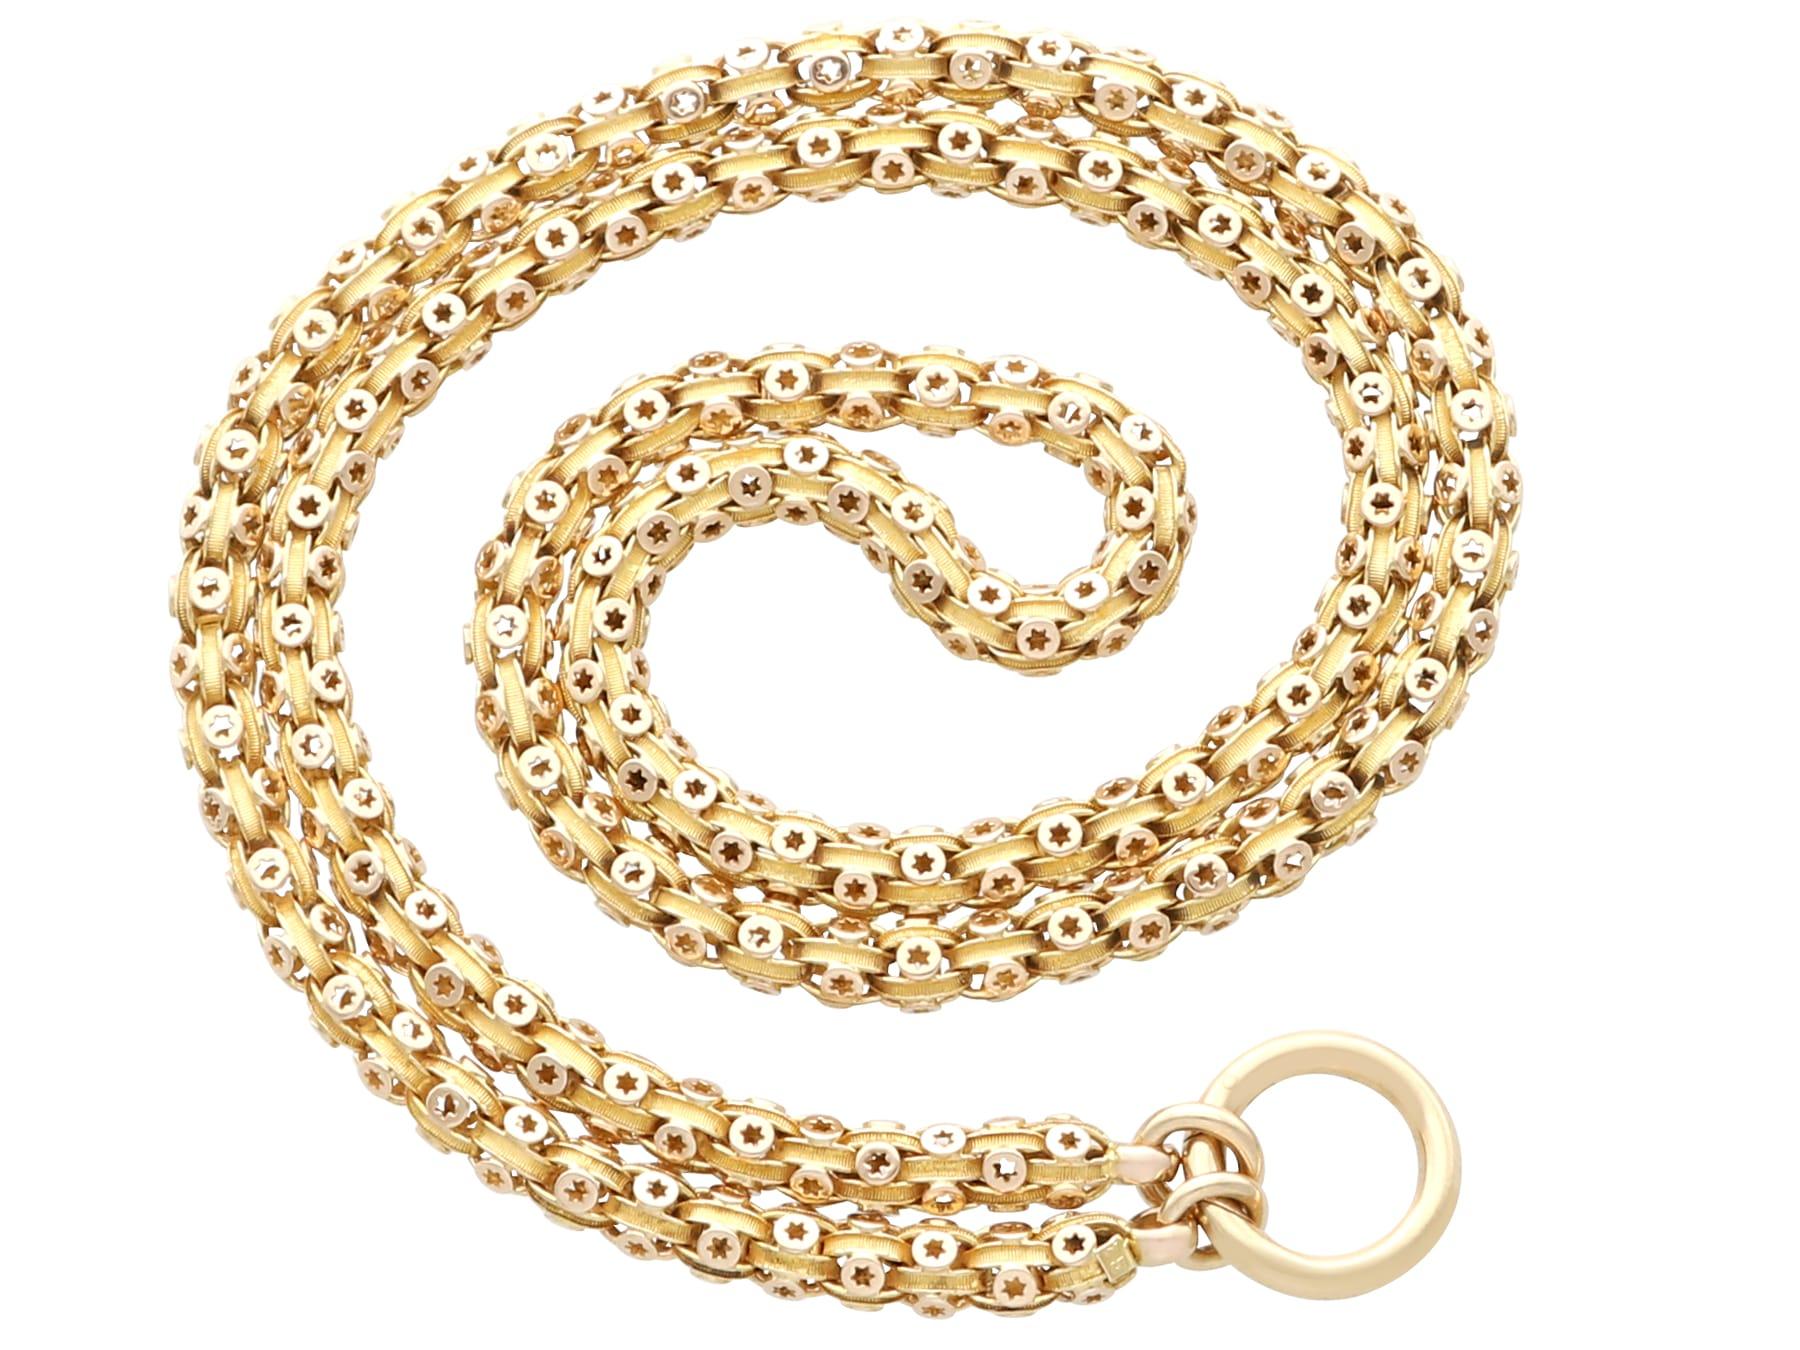 15k gold chain